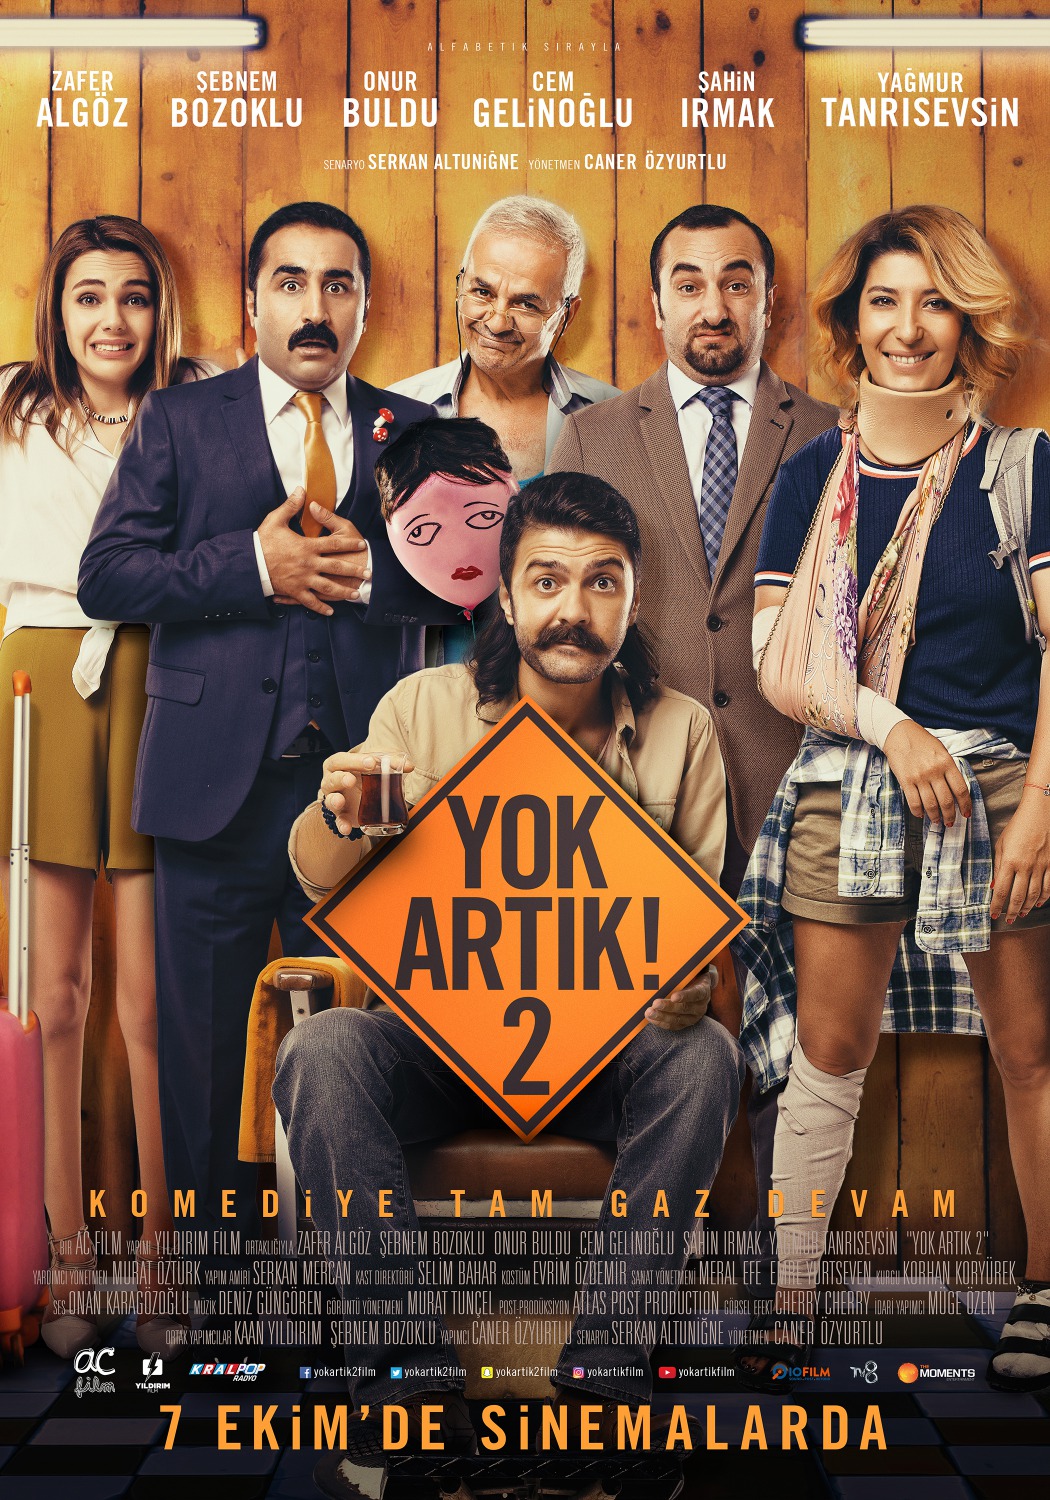 Extra Large Movie Poster Image for Yok Artik 2 